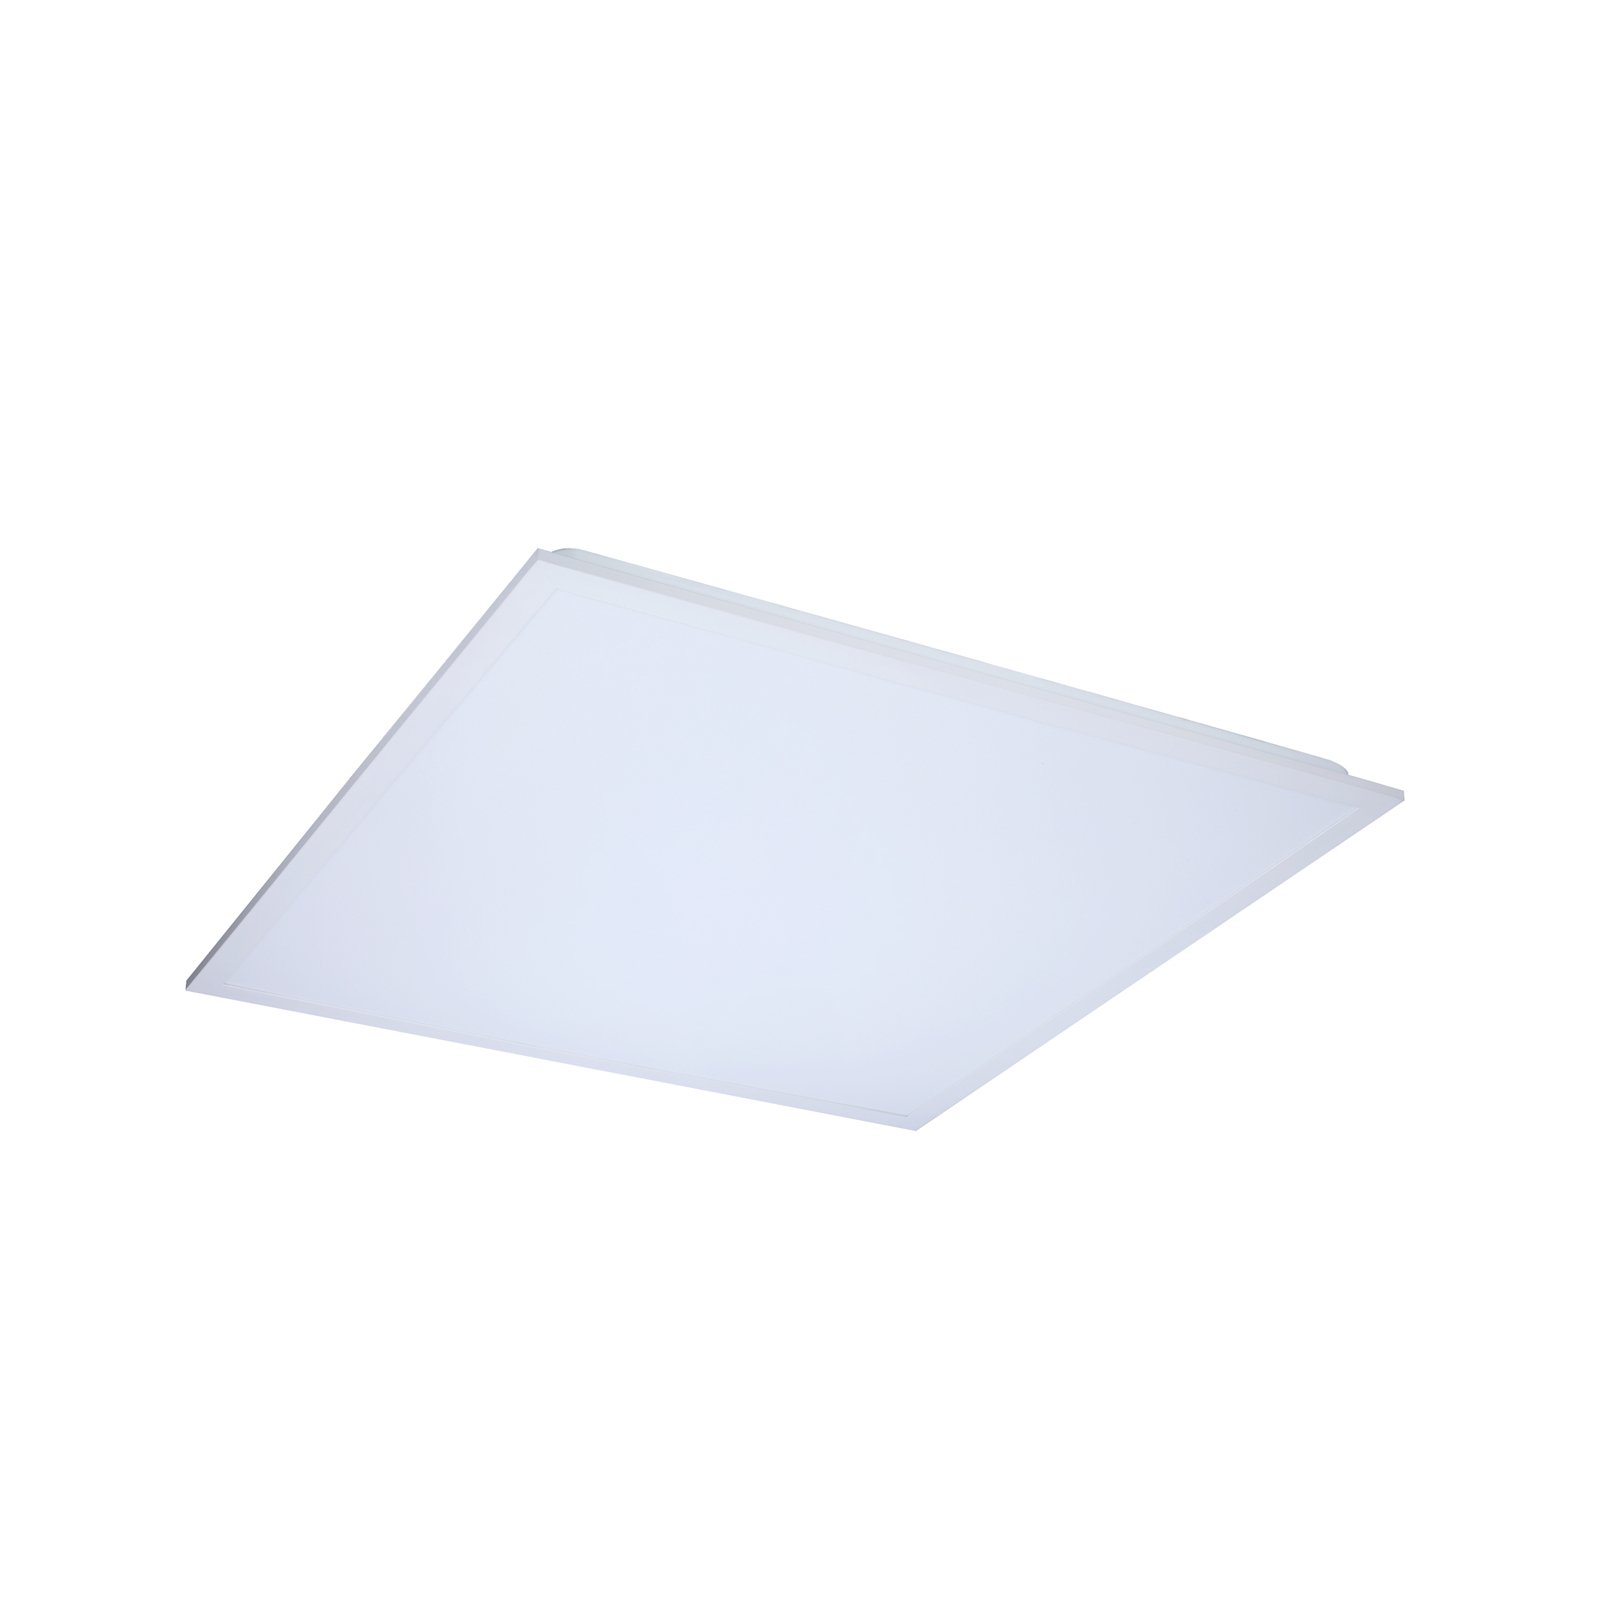 Pannello LED Sylvania Start, bianco, 62 x 62 cm, 30 W, UGR19, 830